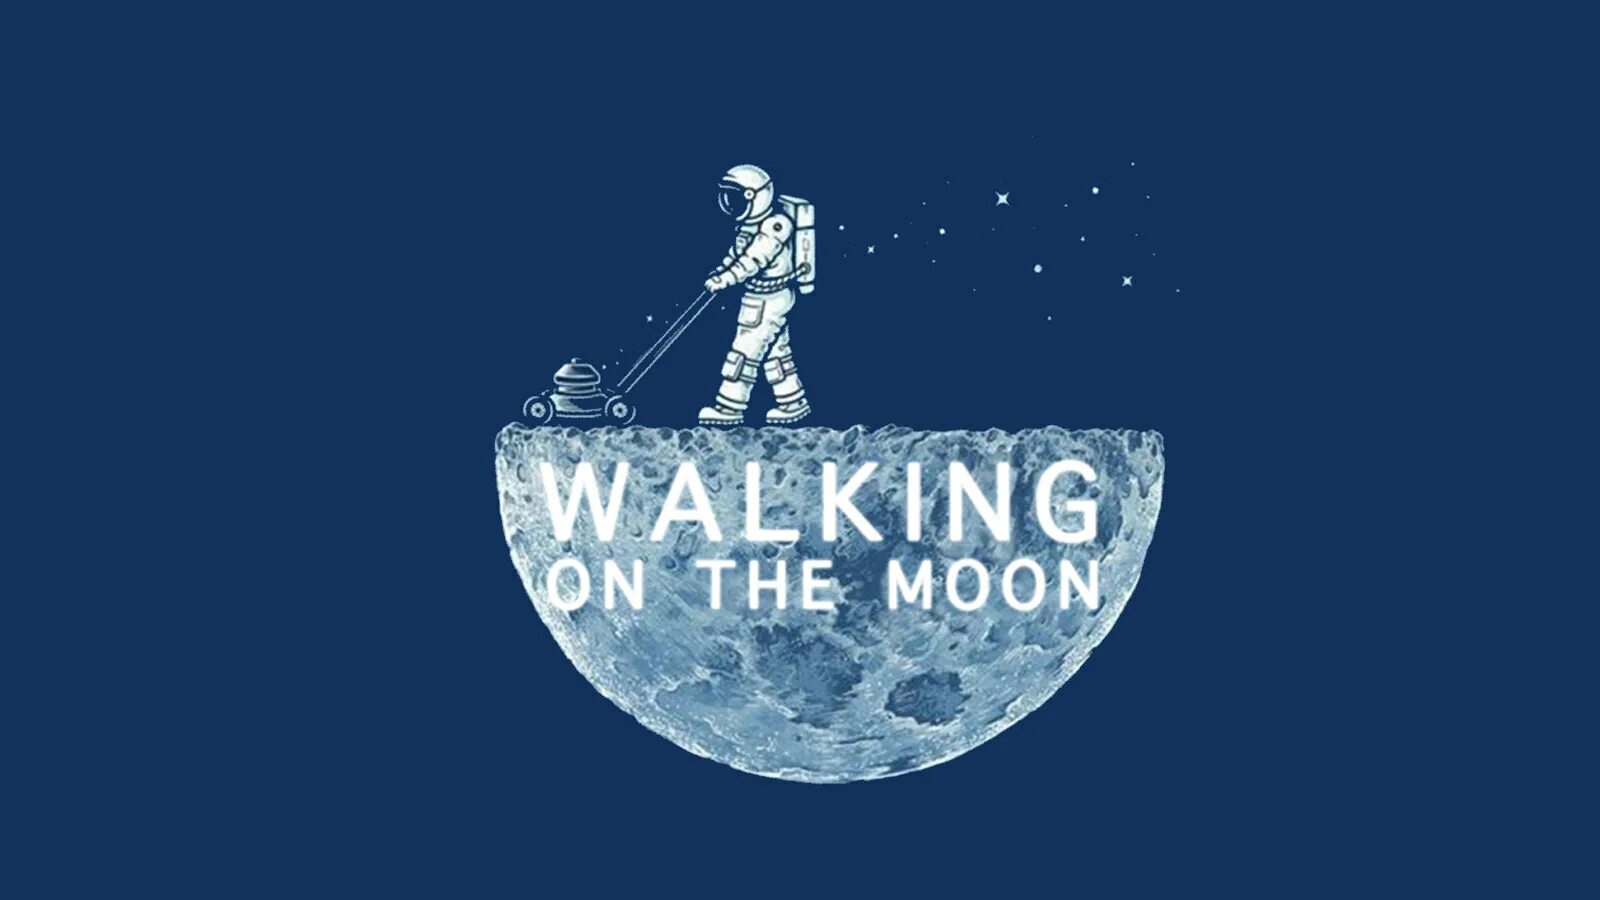 To the Moon логотип. Moon надпись. To the Moon надпись. Walking on the moon